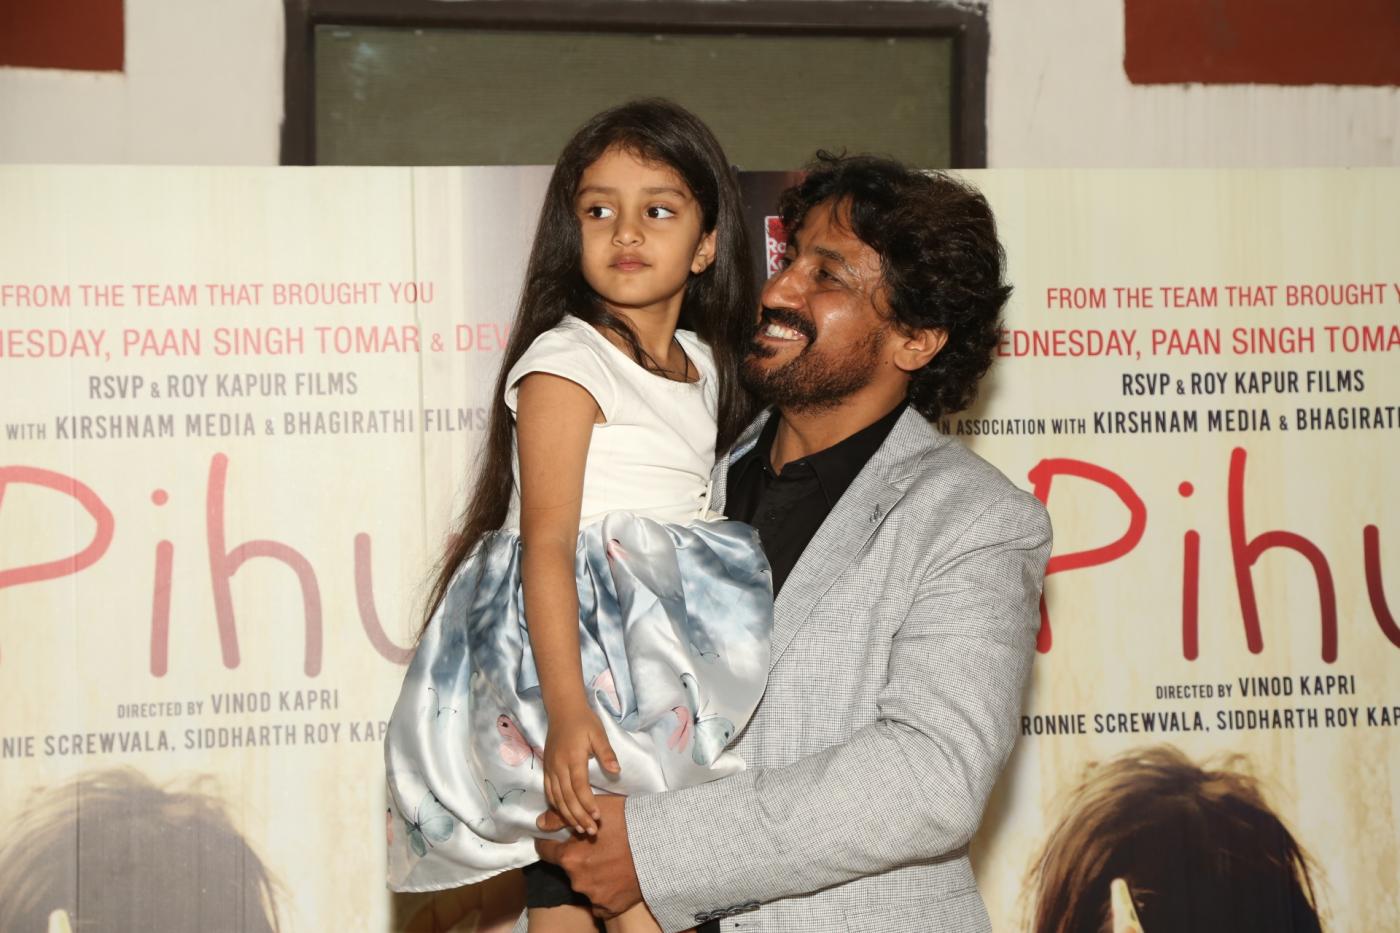 New Delhi: Child actor Myra Vishwakarma along with director Vinod Kapri during the special screening of the upcoming film "Pihu" in New Delhi on Nov 9, 2018. (Photo: Amlan Paliwal/IANS) by .